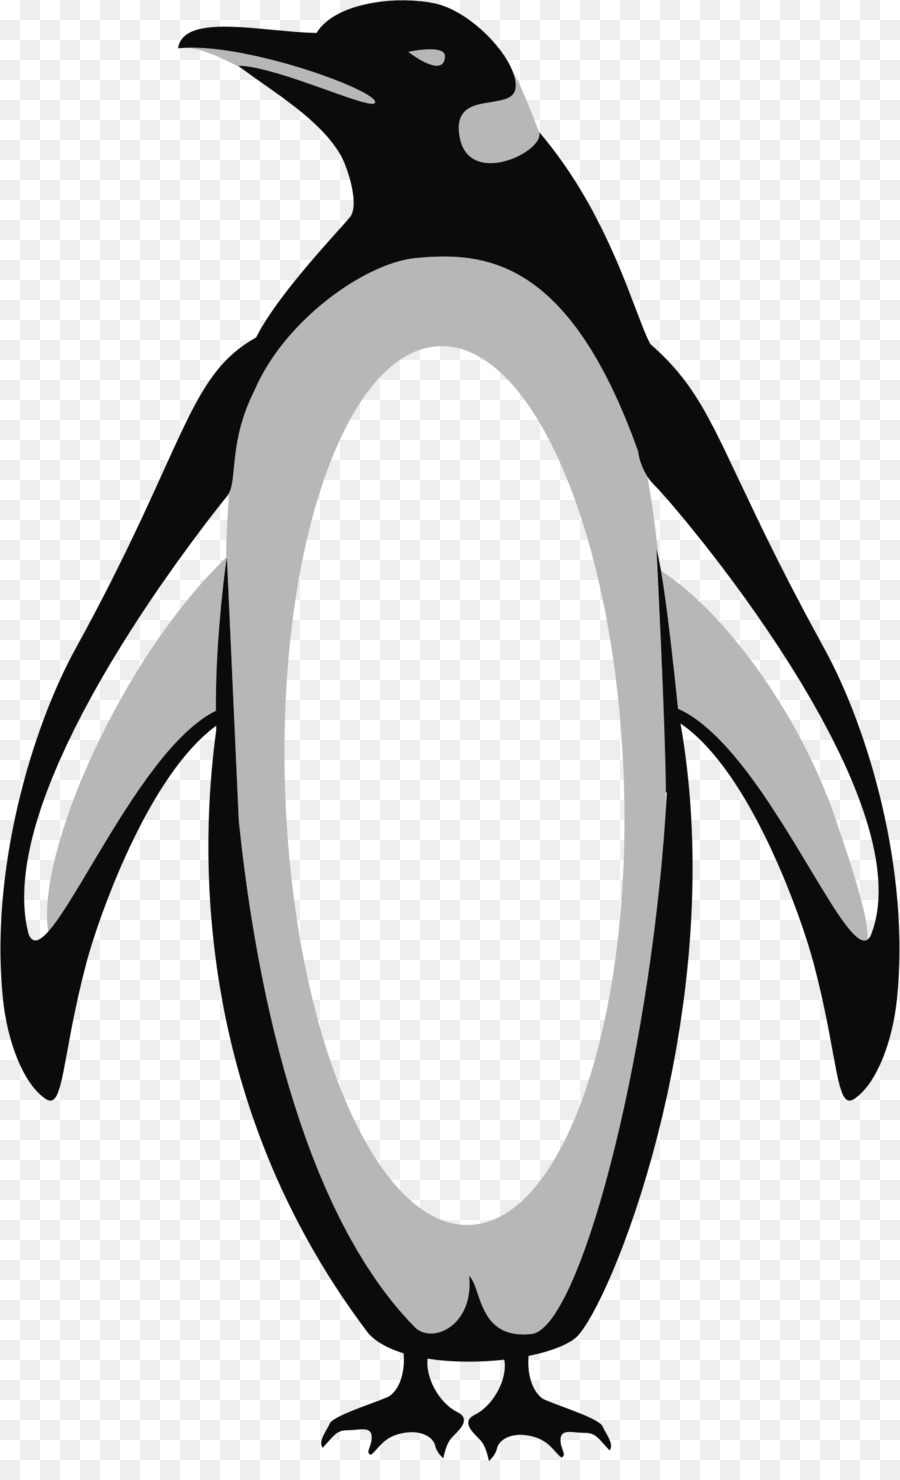 Emperor penguin Clip art Vector graphics Openclipart - penguin png download - 1462*2374 - Free Transparent Penguin png Download.